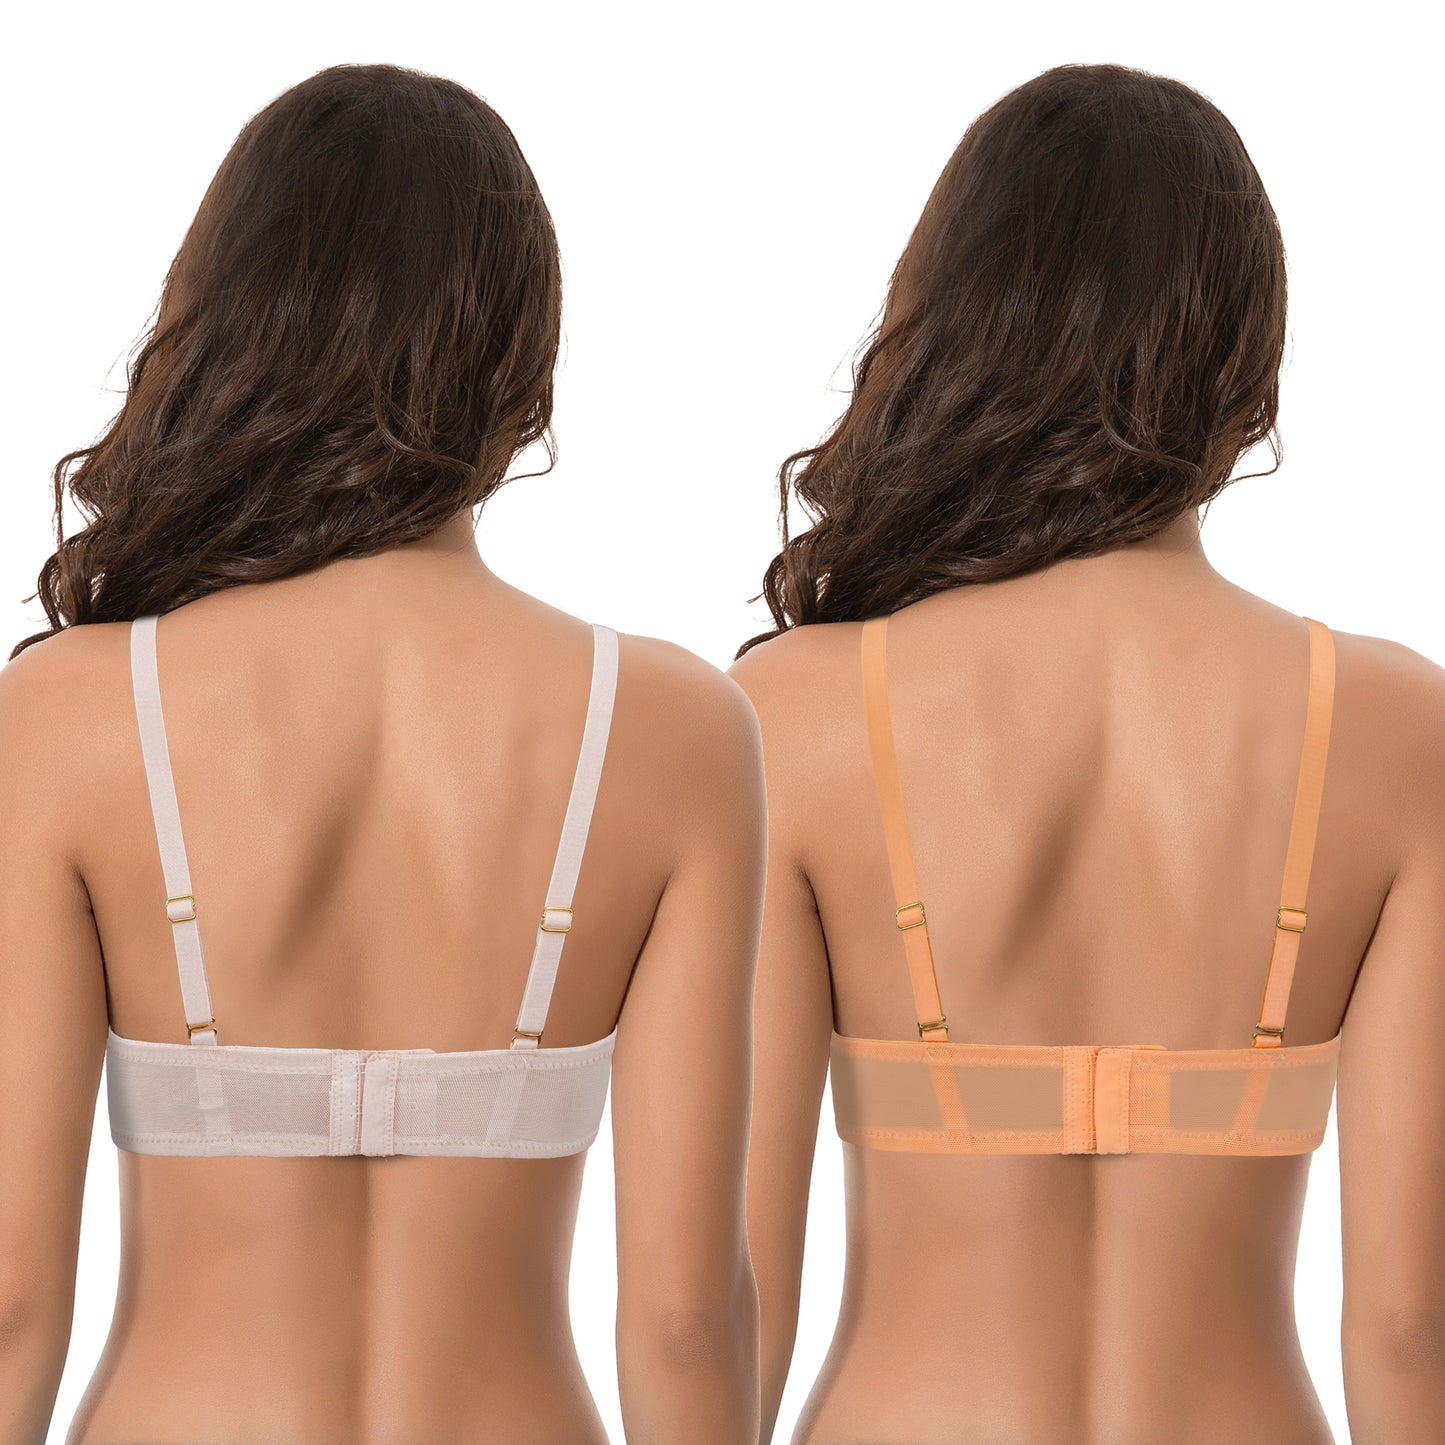 Women's Plus Size Add 1+ Cup Push Up Perfect Shape Underwire Lace Bra-2PK-Nude,Orange